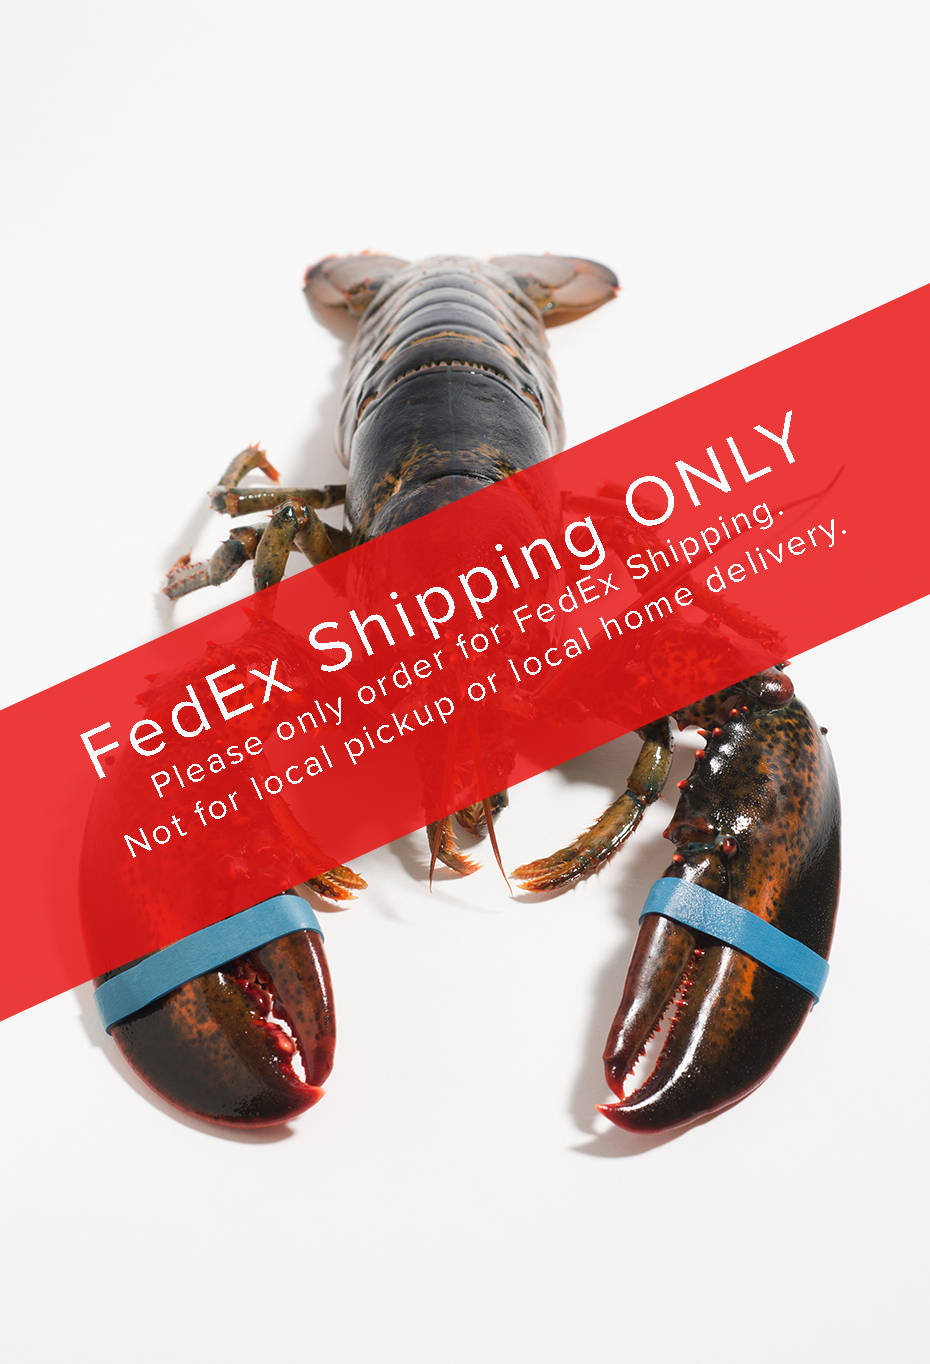 Live Maine Lobster shipped overnight! • Harbor Fish Market